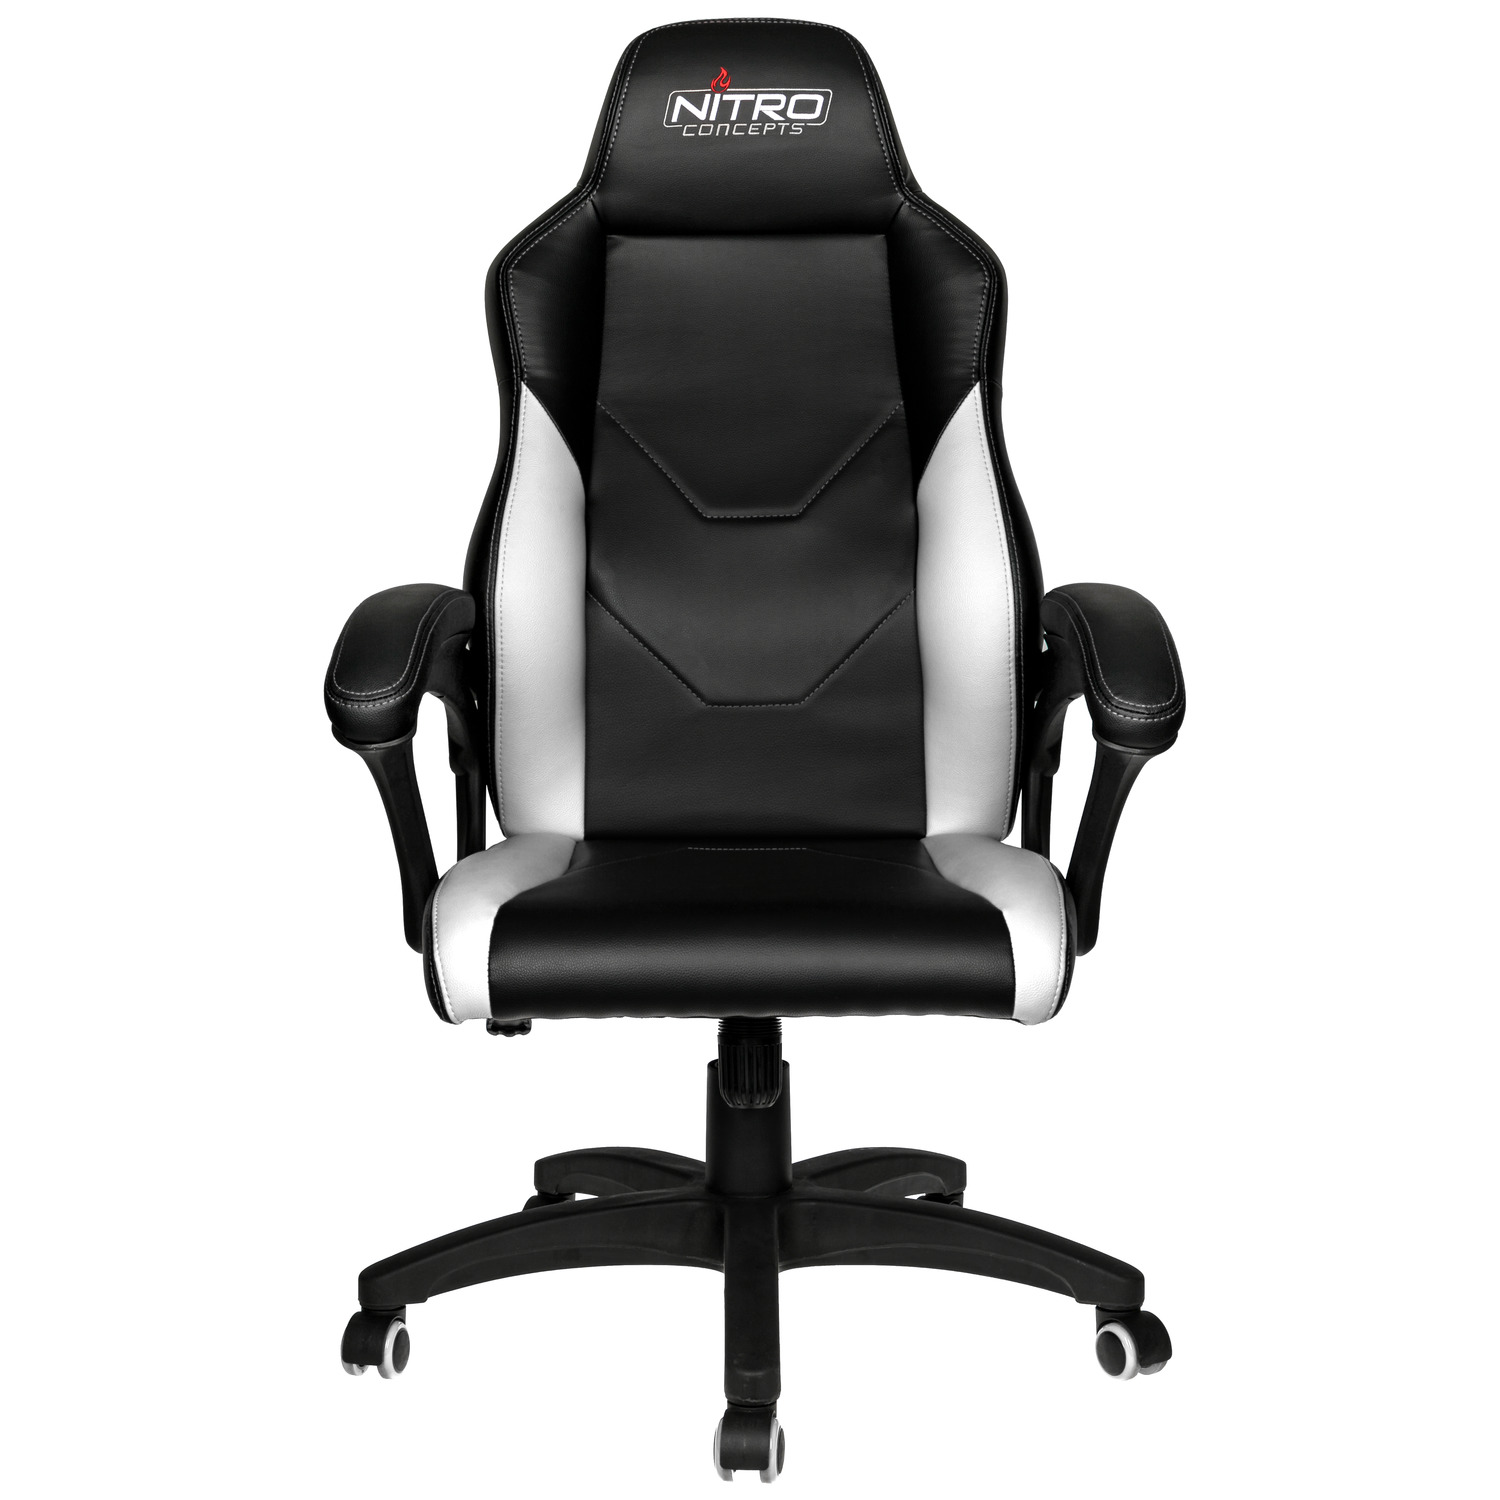 Nitro Concepts - C100 Gaming Chair Black/White